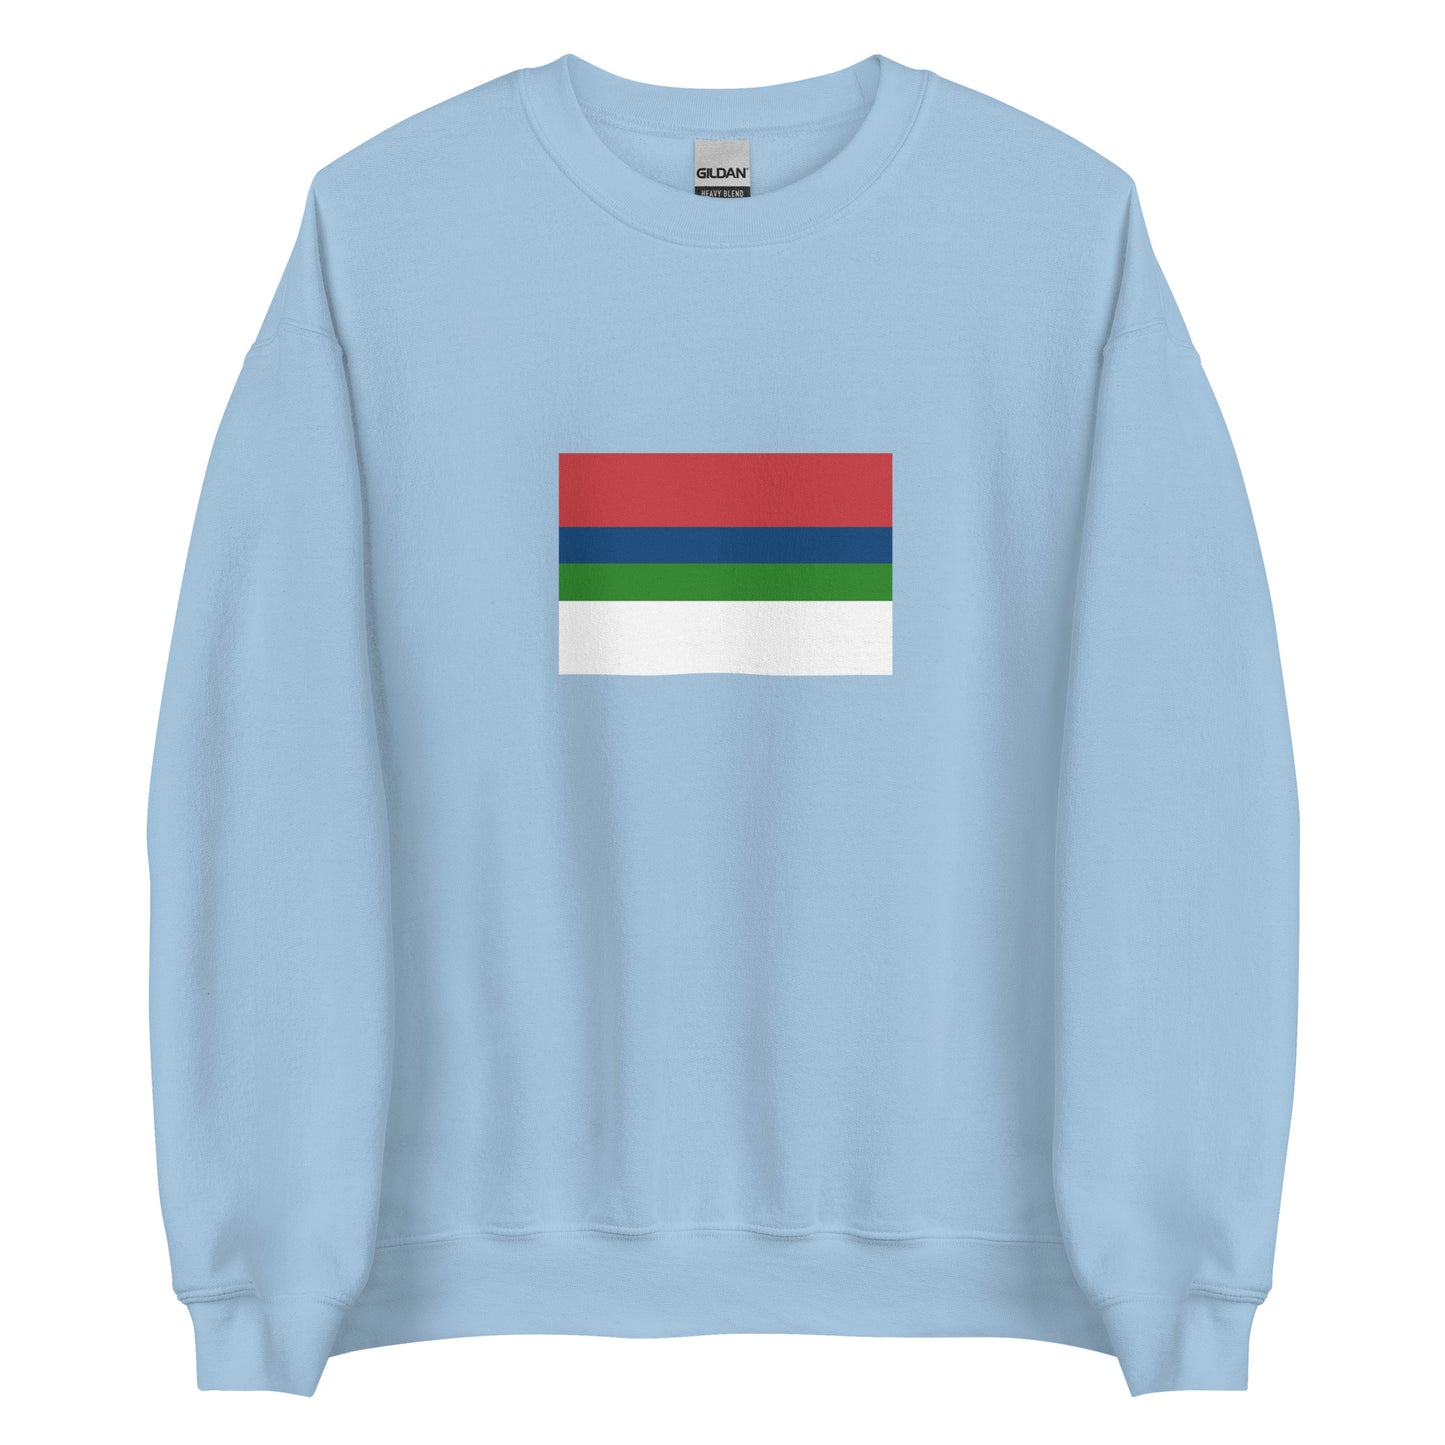 Serbia - South Slavs | Ethnic Flag Unisex Sweatshirt